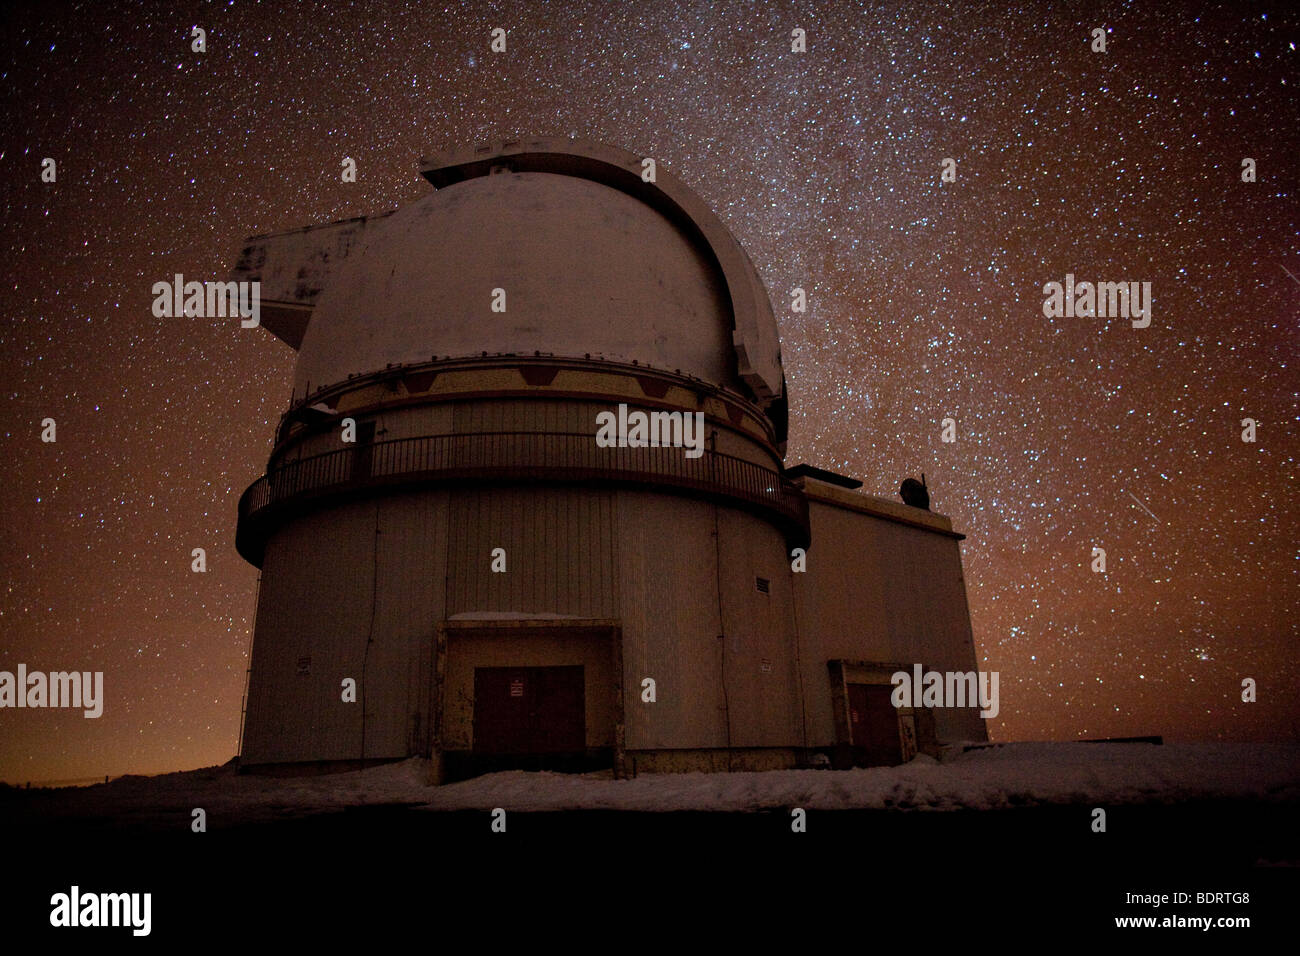 The Milky Way behind the University of Hawaii 2.2-meter telescope at Mauna Kea Observatory, Hawaii Stock Photo